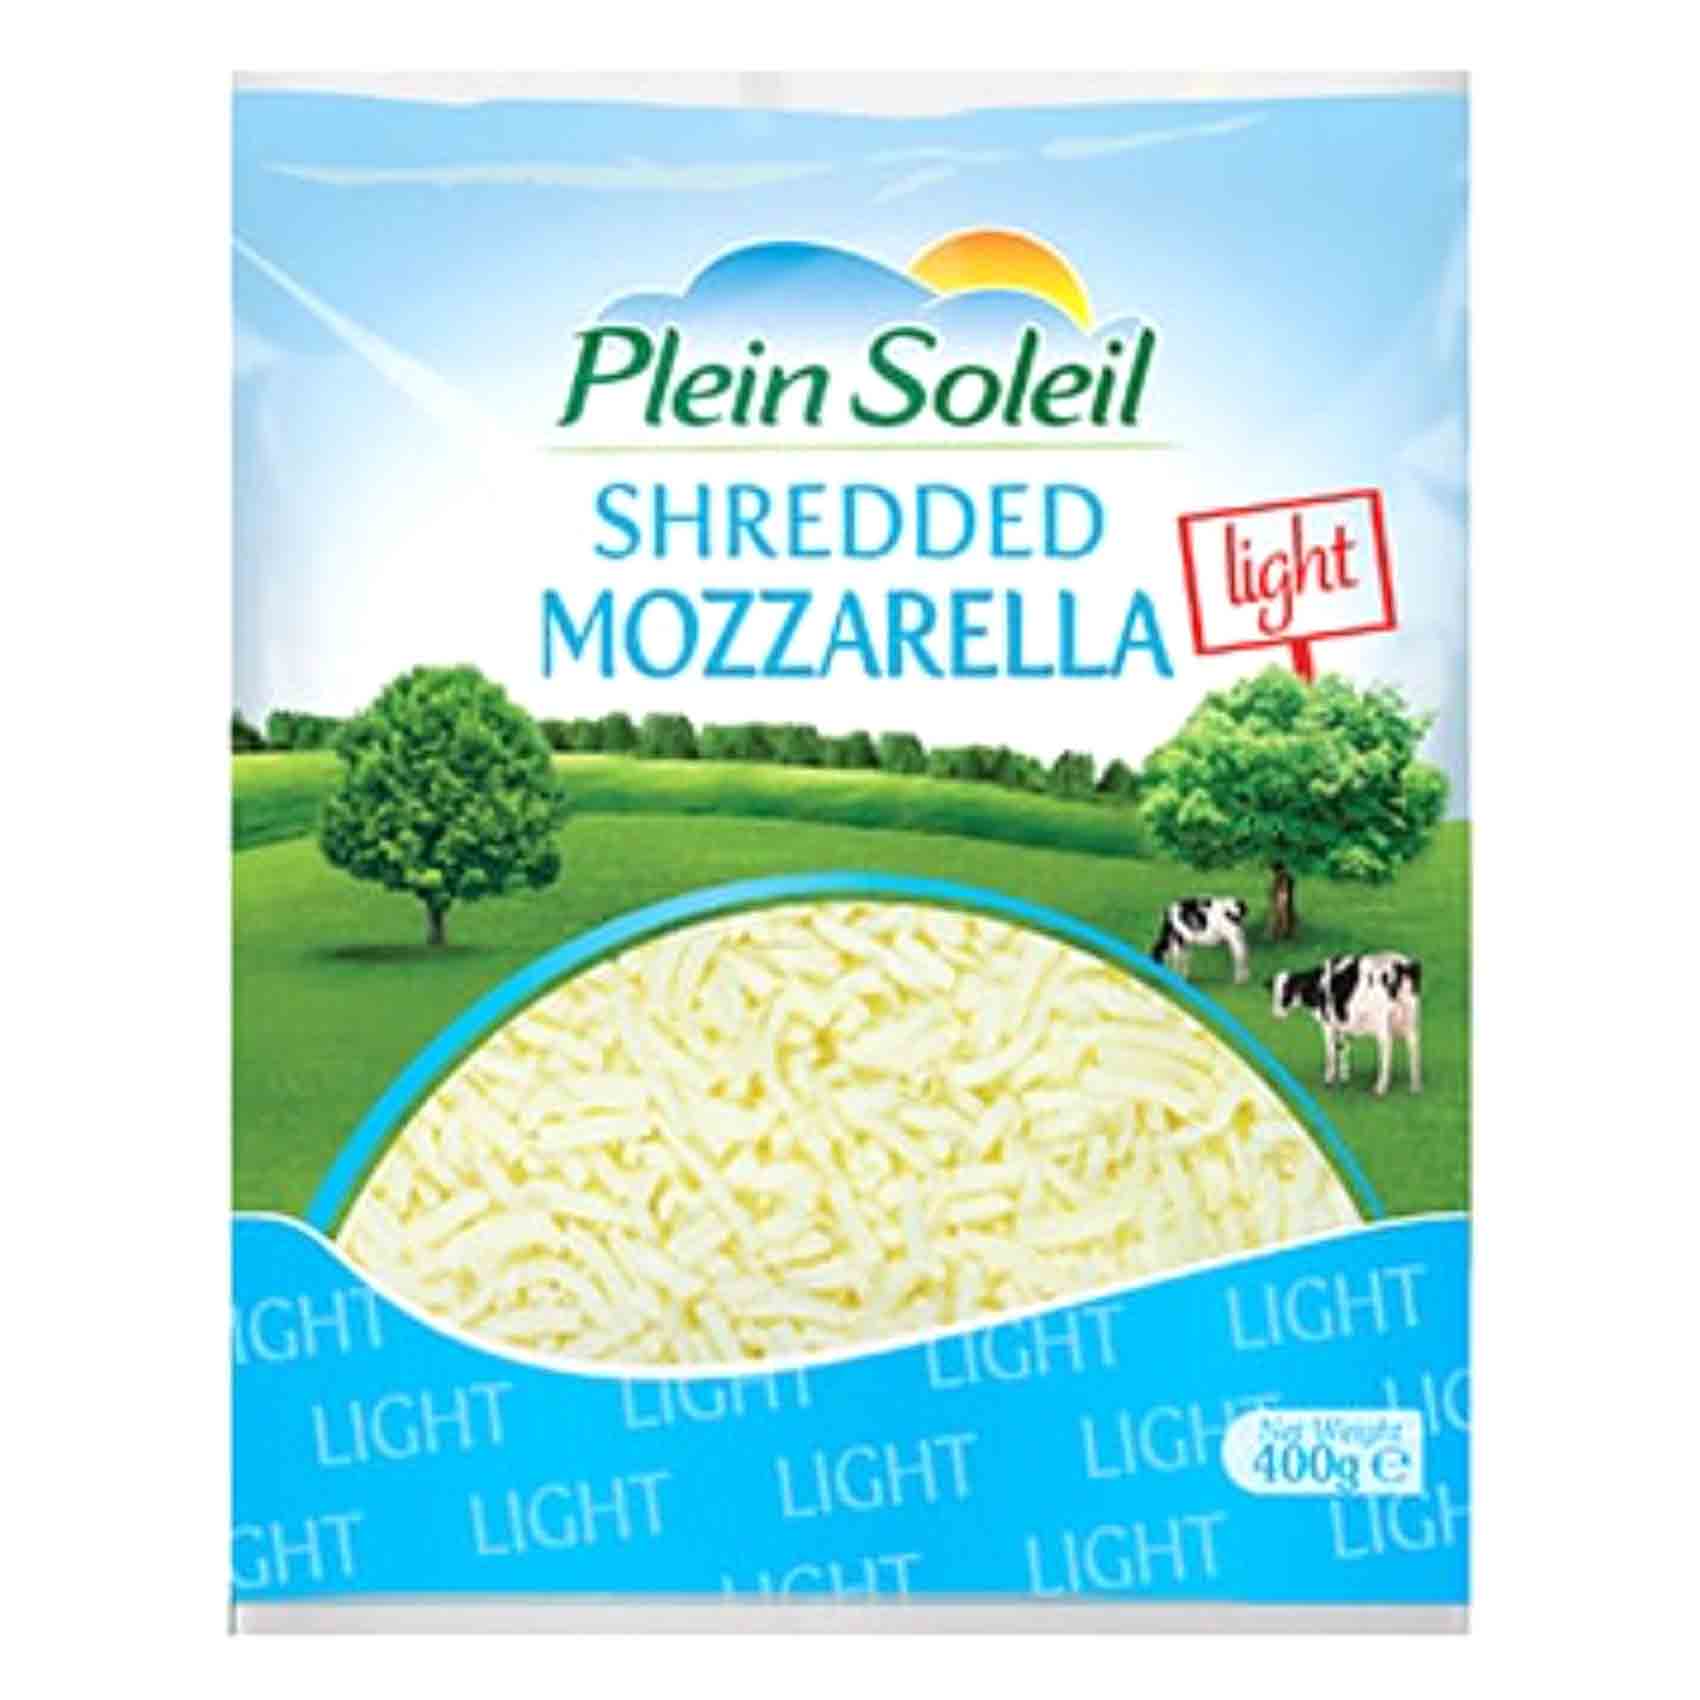 Plein Soleil Light Shredded Mozzarella Cheese 400g